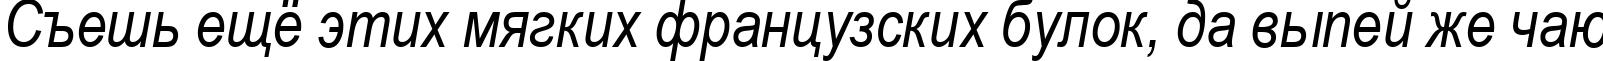 Пример написания шрифтом Ariac  Italic текста на русском